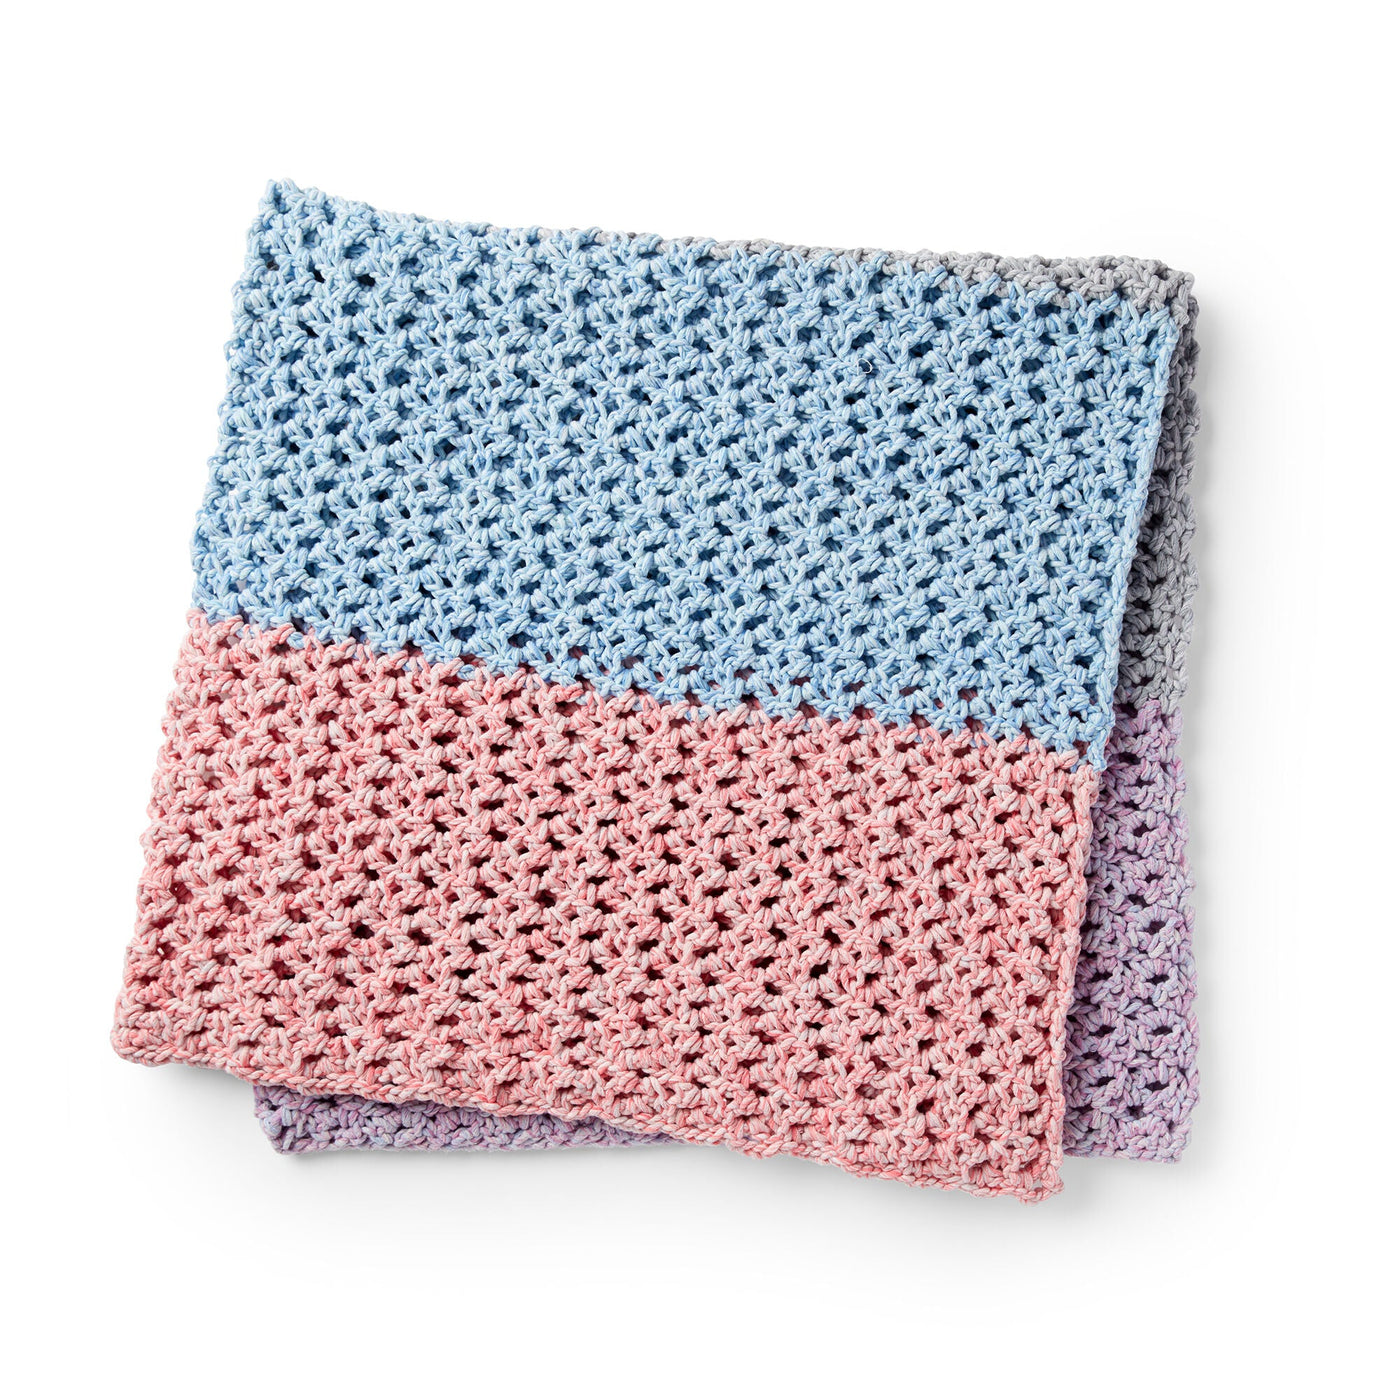 CROCHET PATTERN DOWNLOAD - Bernat Baby Marly Bold Stripes Crochet Blanket